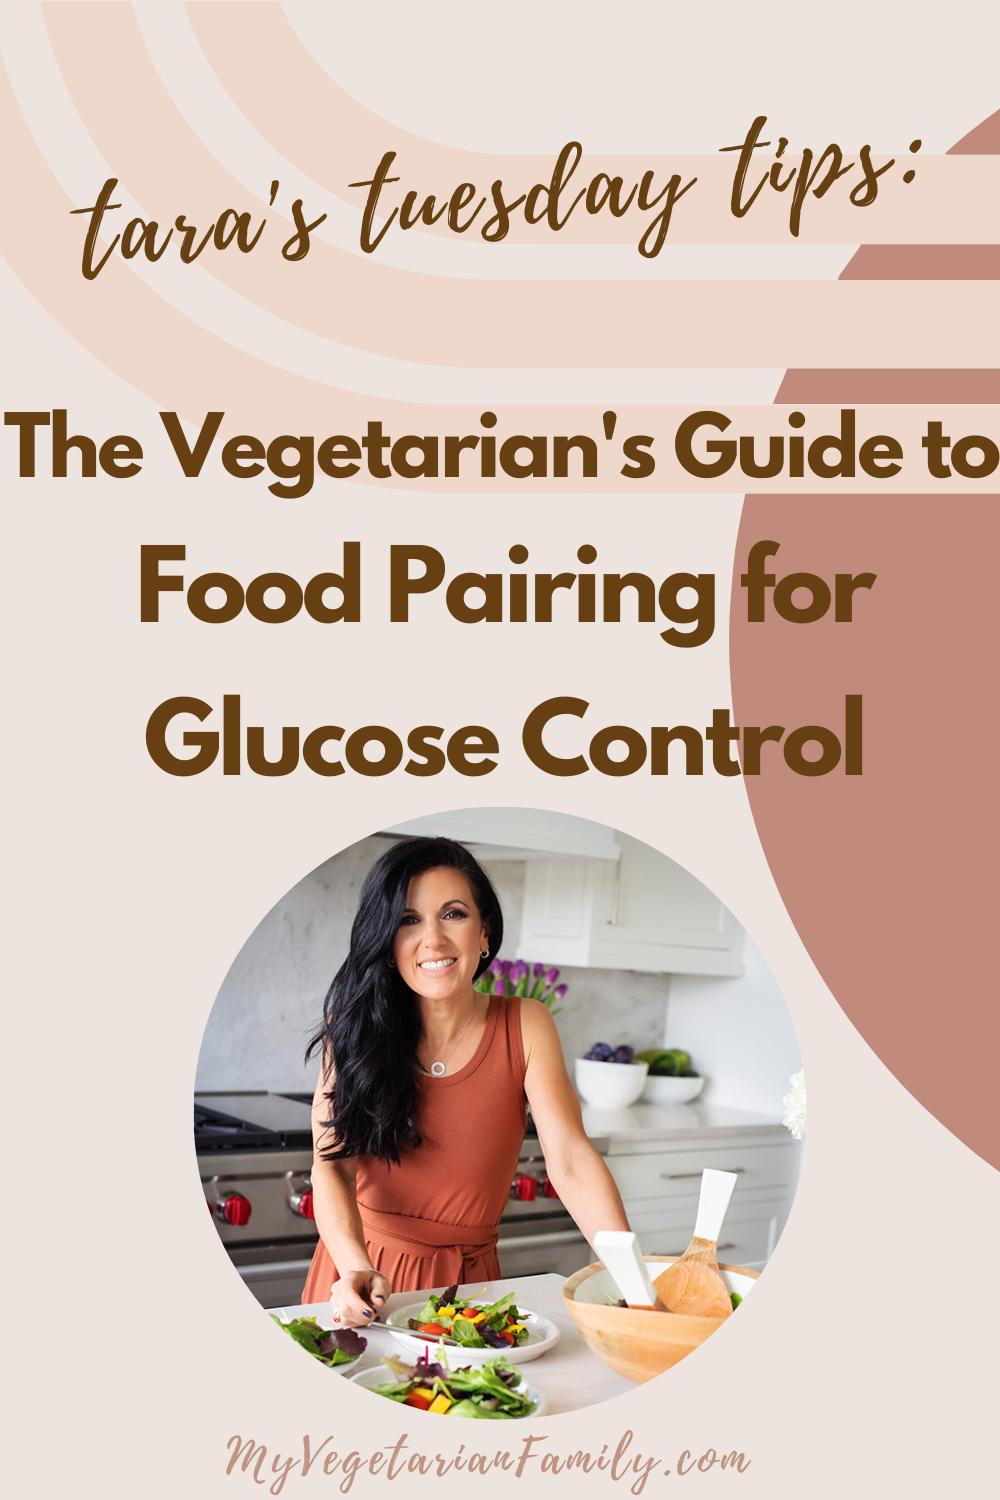 The Vegetarian's Guide to Food Pairing for Glucose Control | Tara's Tuesday Tips | My Vegetarian Family #nutritiontips #tarastuesdaytips #vegetarianfoodpairing